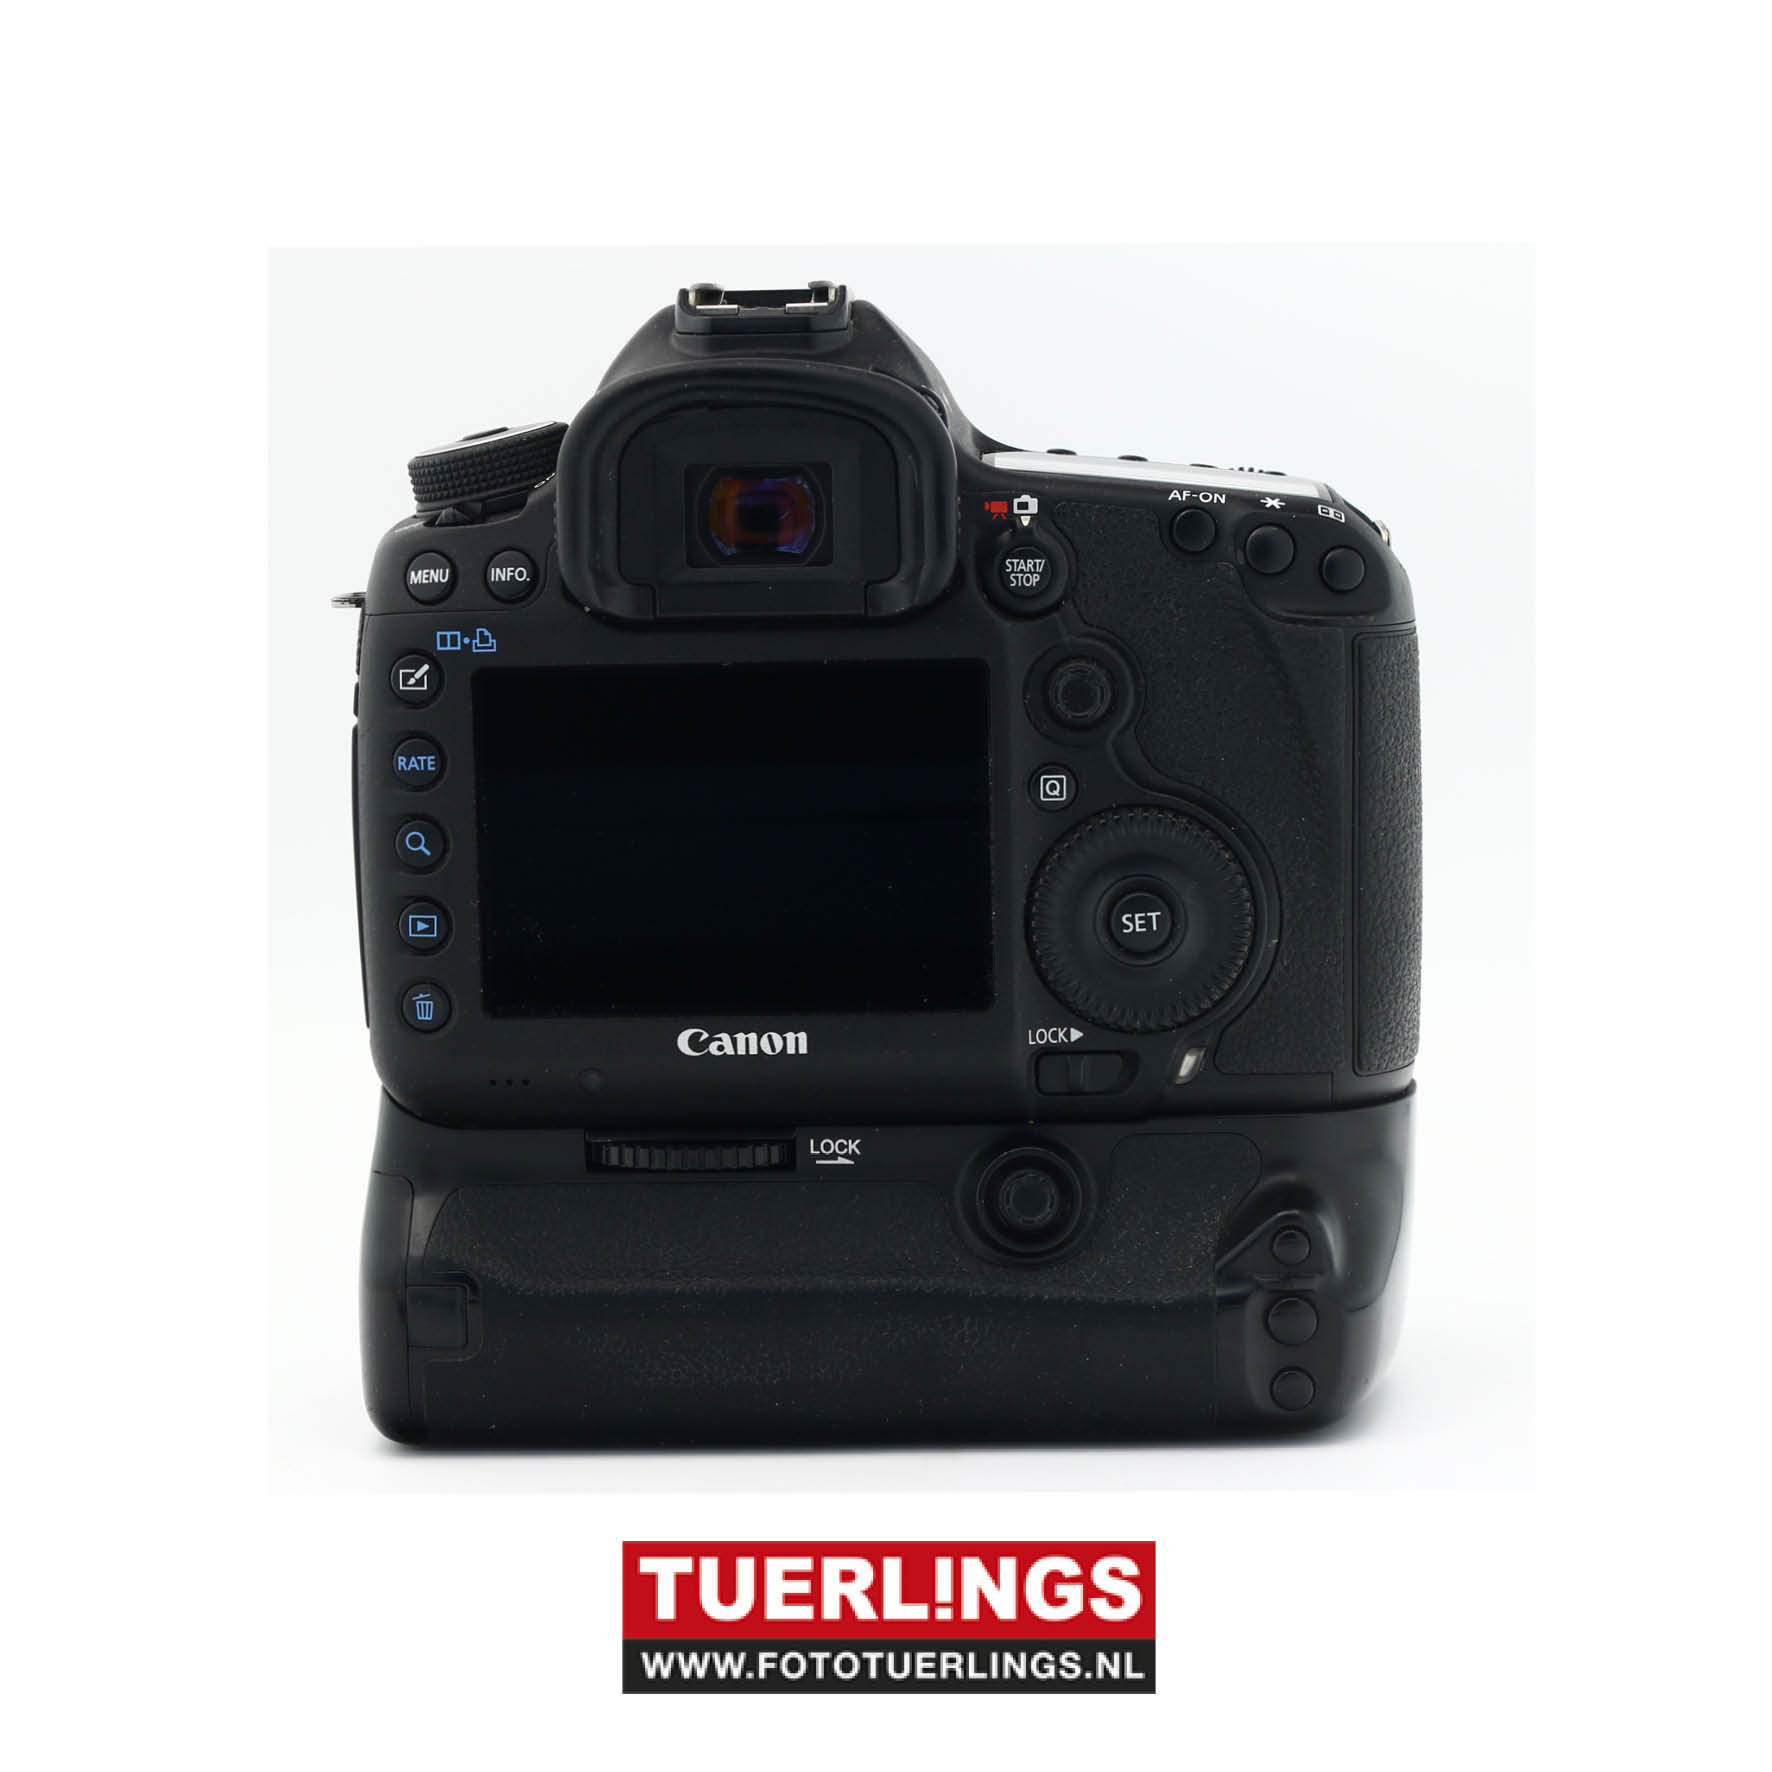 Negende je bent pijn Canon EOS 5D Mark III Full-frame DSLR + Grip occasion - Foto Tuerlings